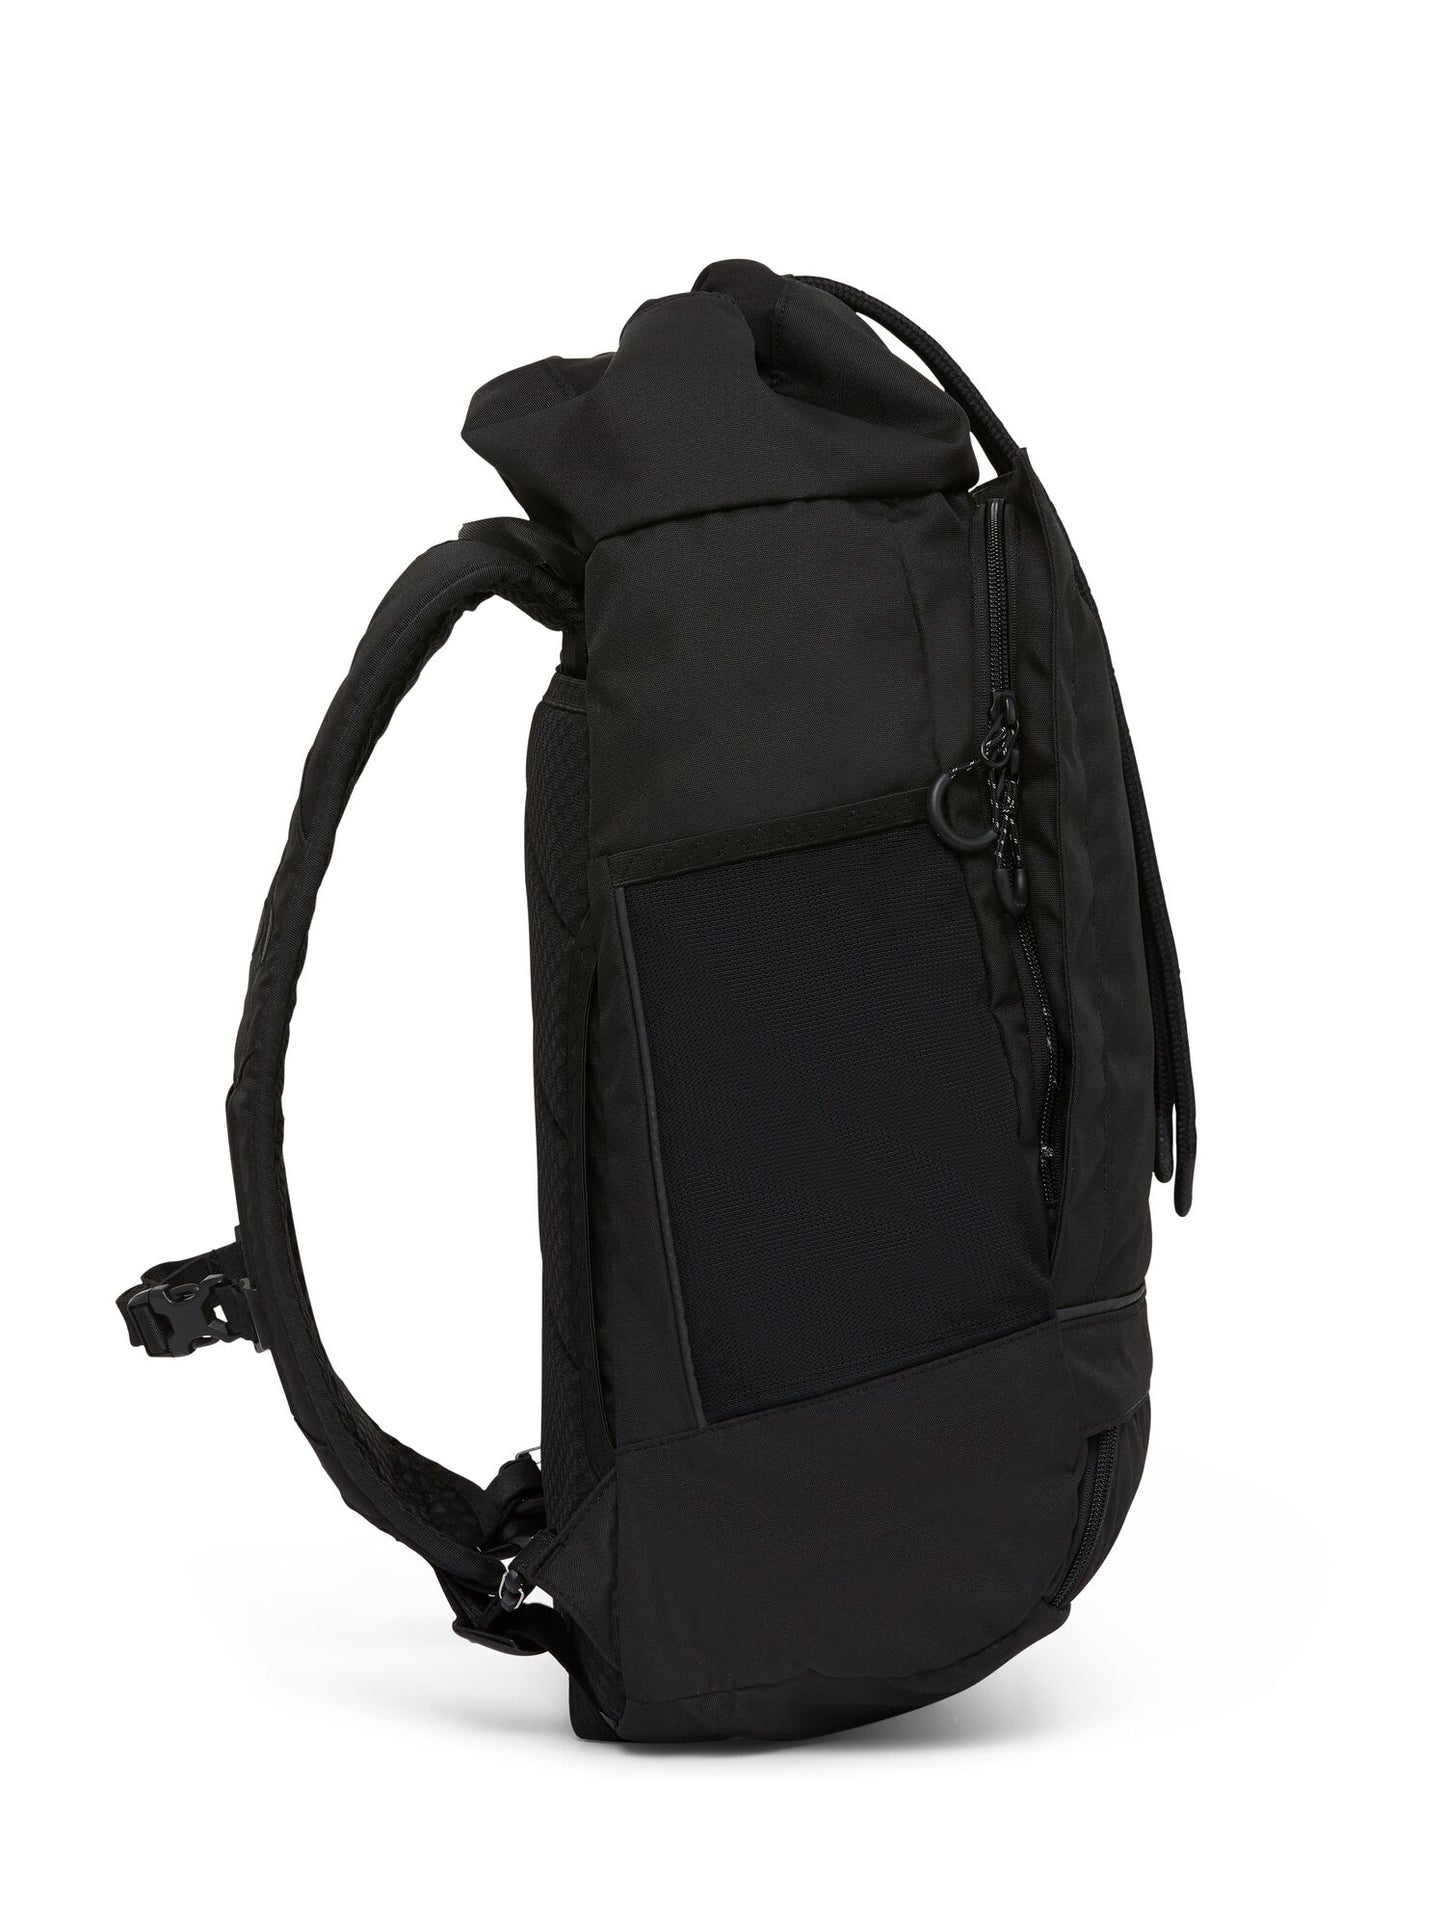 pinqponq-backpack-blok-medium-rooted-black-side